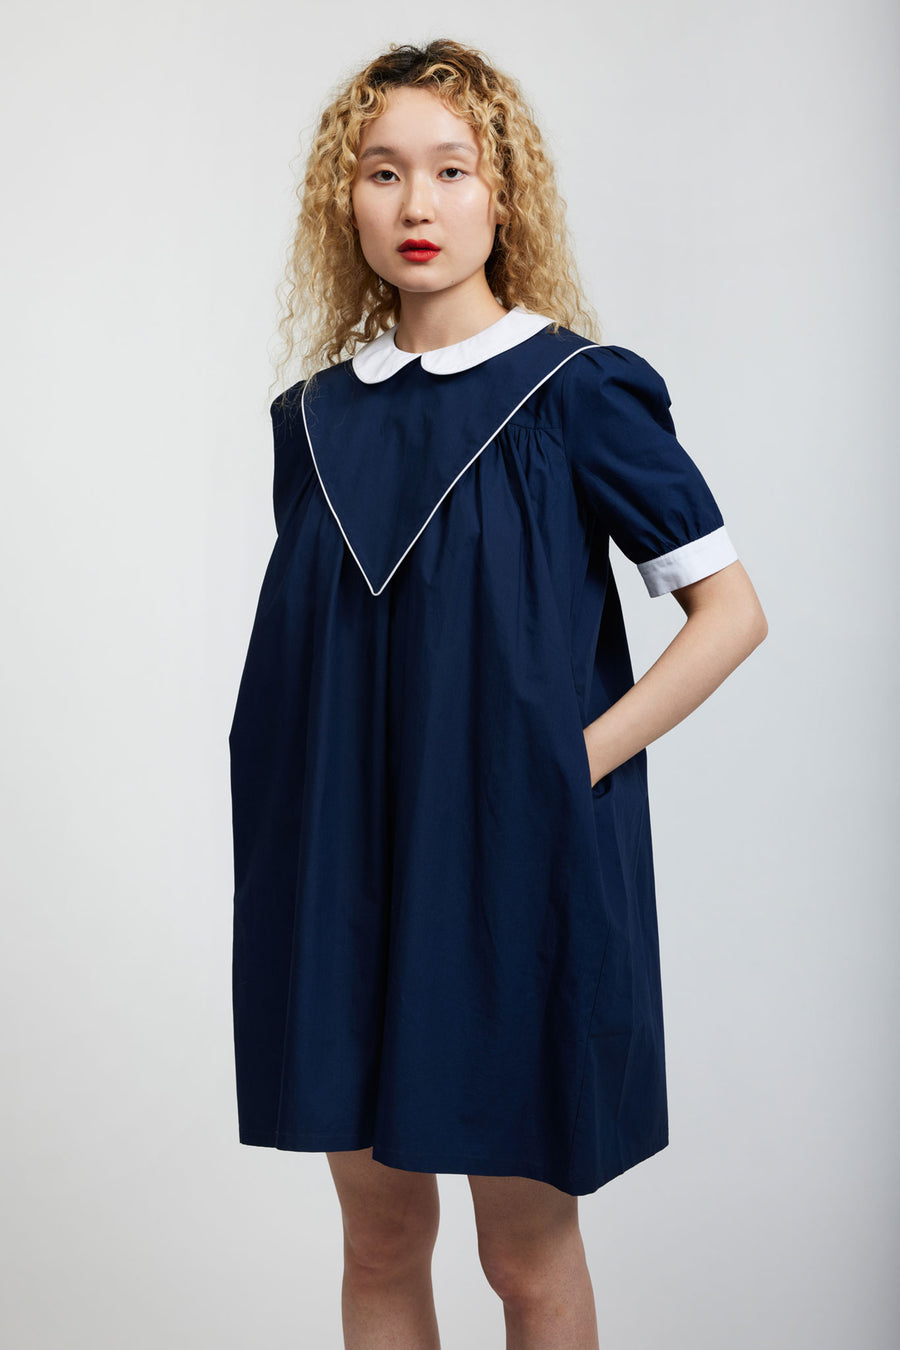 BATSHEVA - Short Sleeve Penelope Dress in Navy